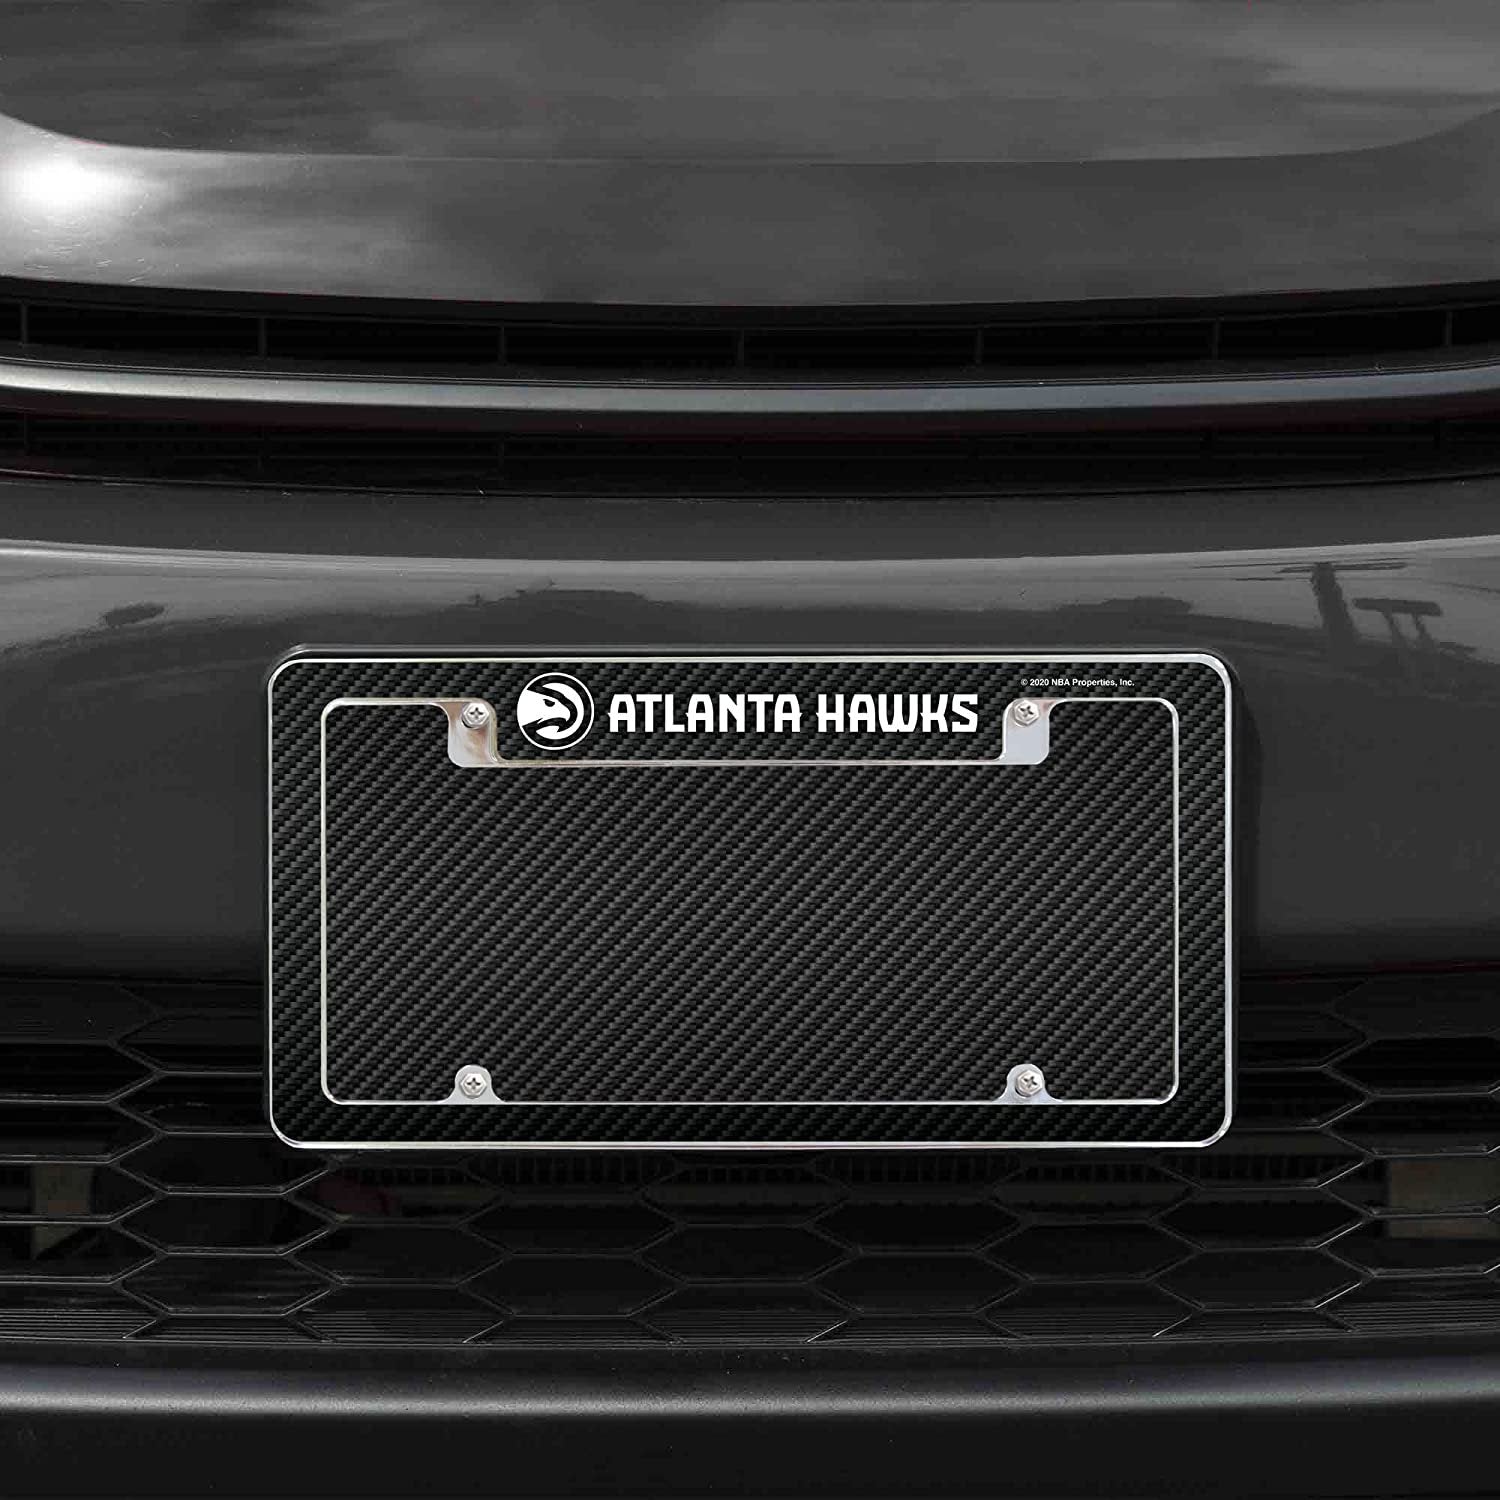 Atlanta Hawks Metal License Plate Frame Tag Cover Carbon Fiber Design 12x6 Inch